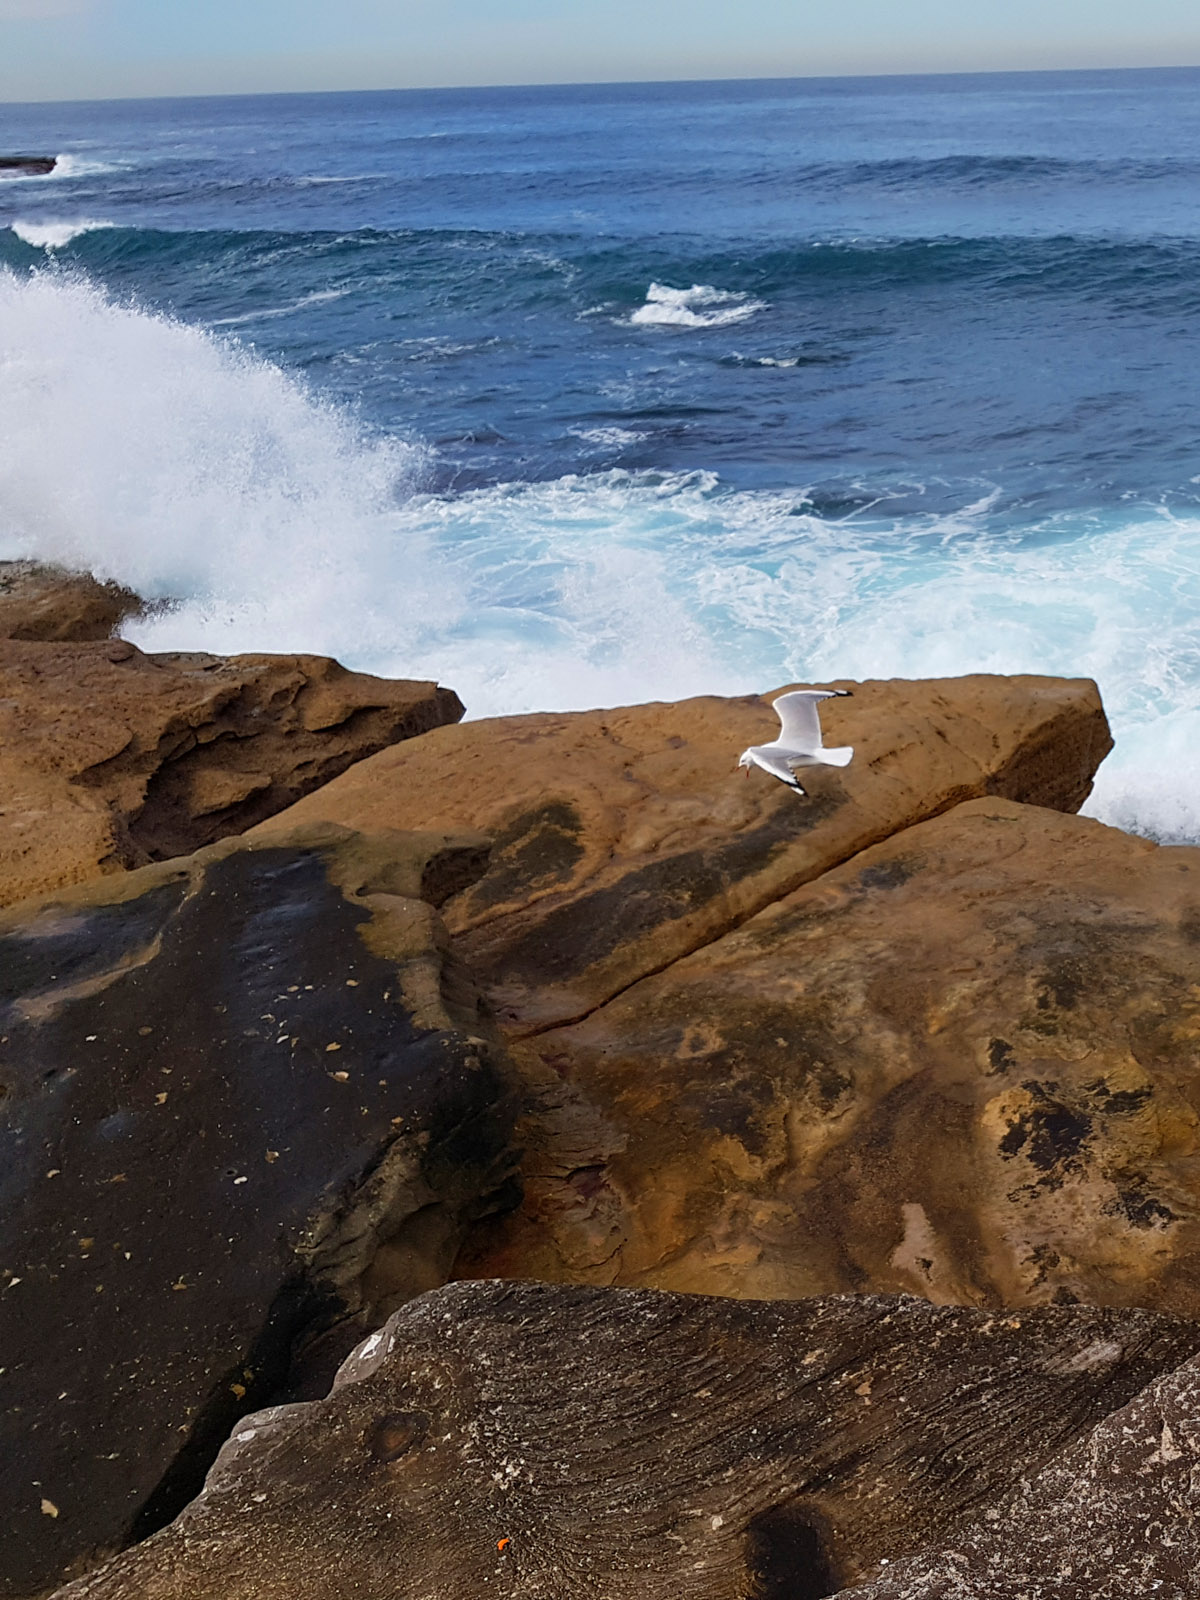 SGMT Australia Sydney_Bondi to Coogee Coastal Walk_16 Clovelly Beach Bird Flying Over Rocks and Water